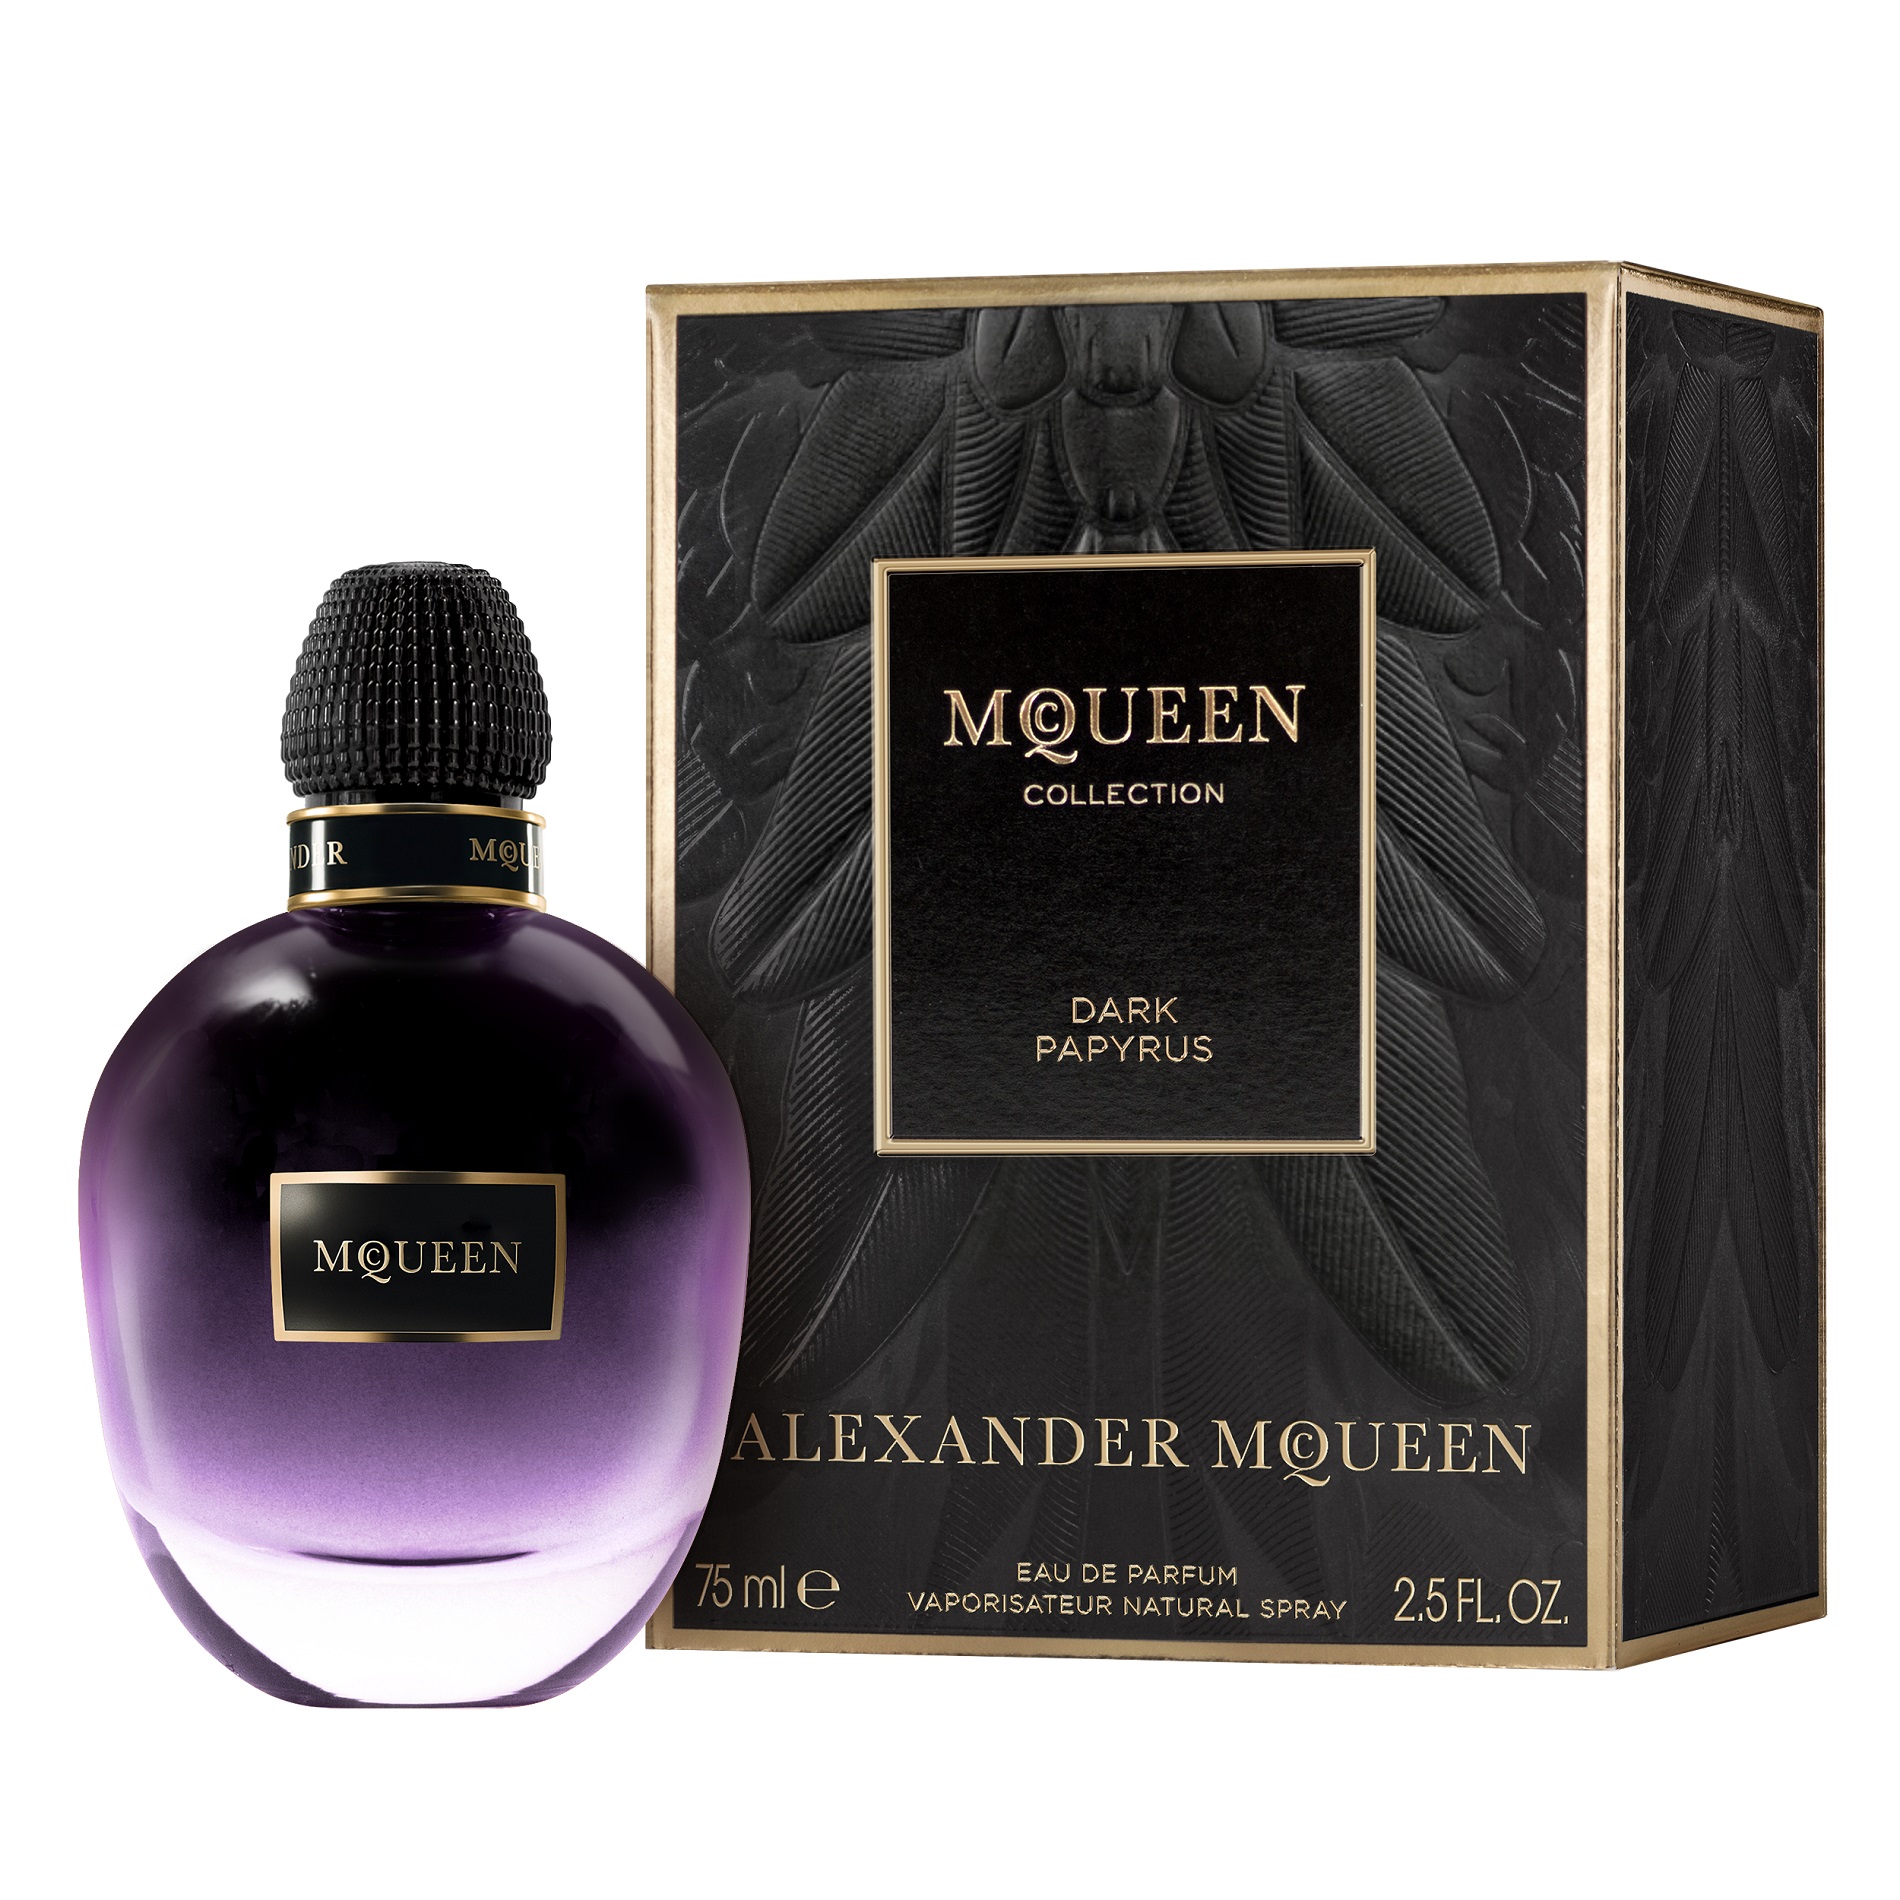 Dark Papyrus Alexander McQueen perfume - a new fragrance for women 2018